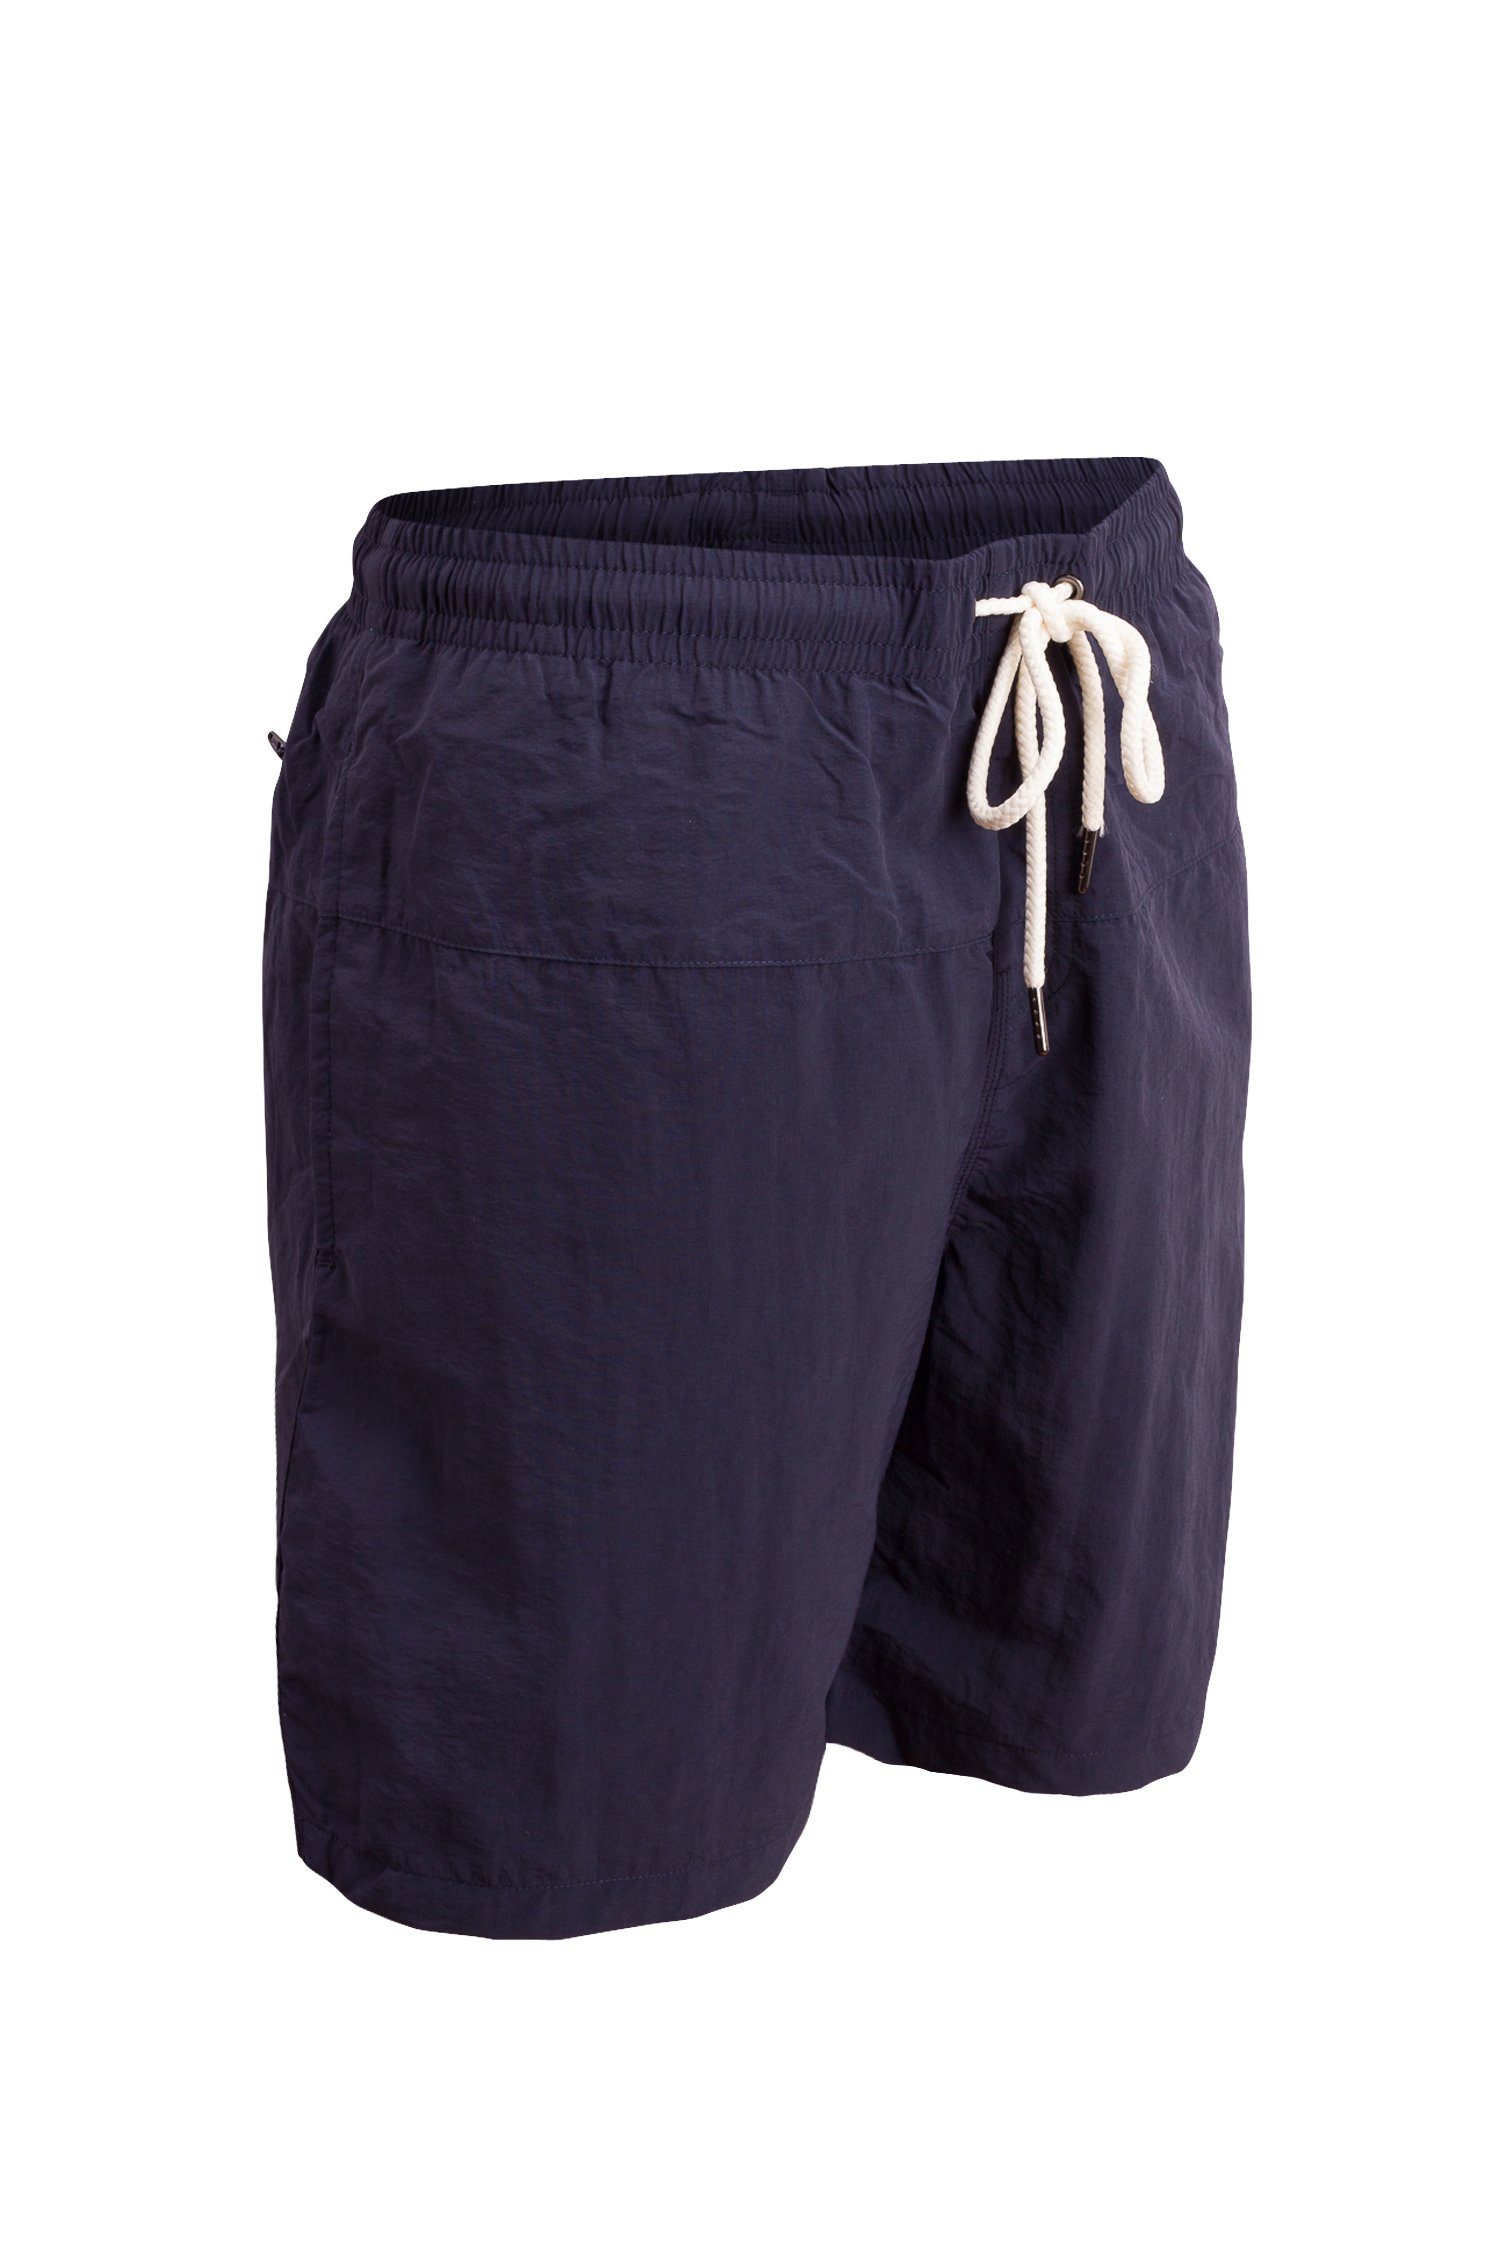 Manufaktur13 Badeshorts Blau - Shorts schnelltrocknend Badehosen Swim